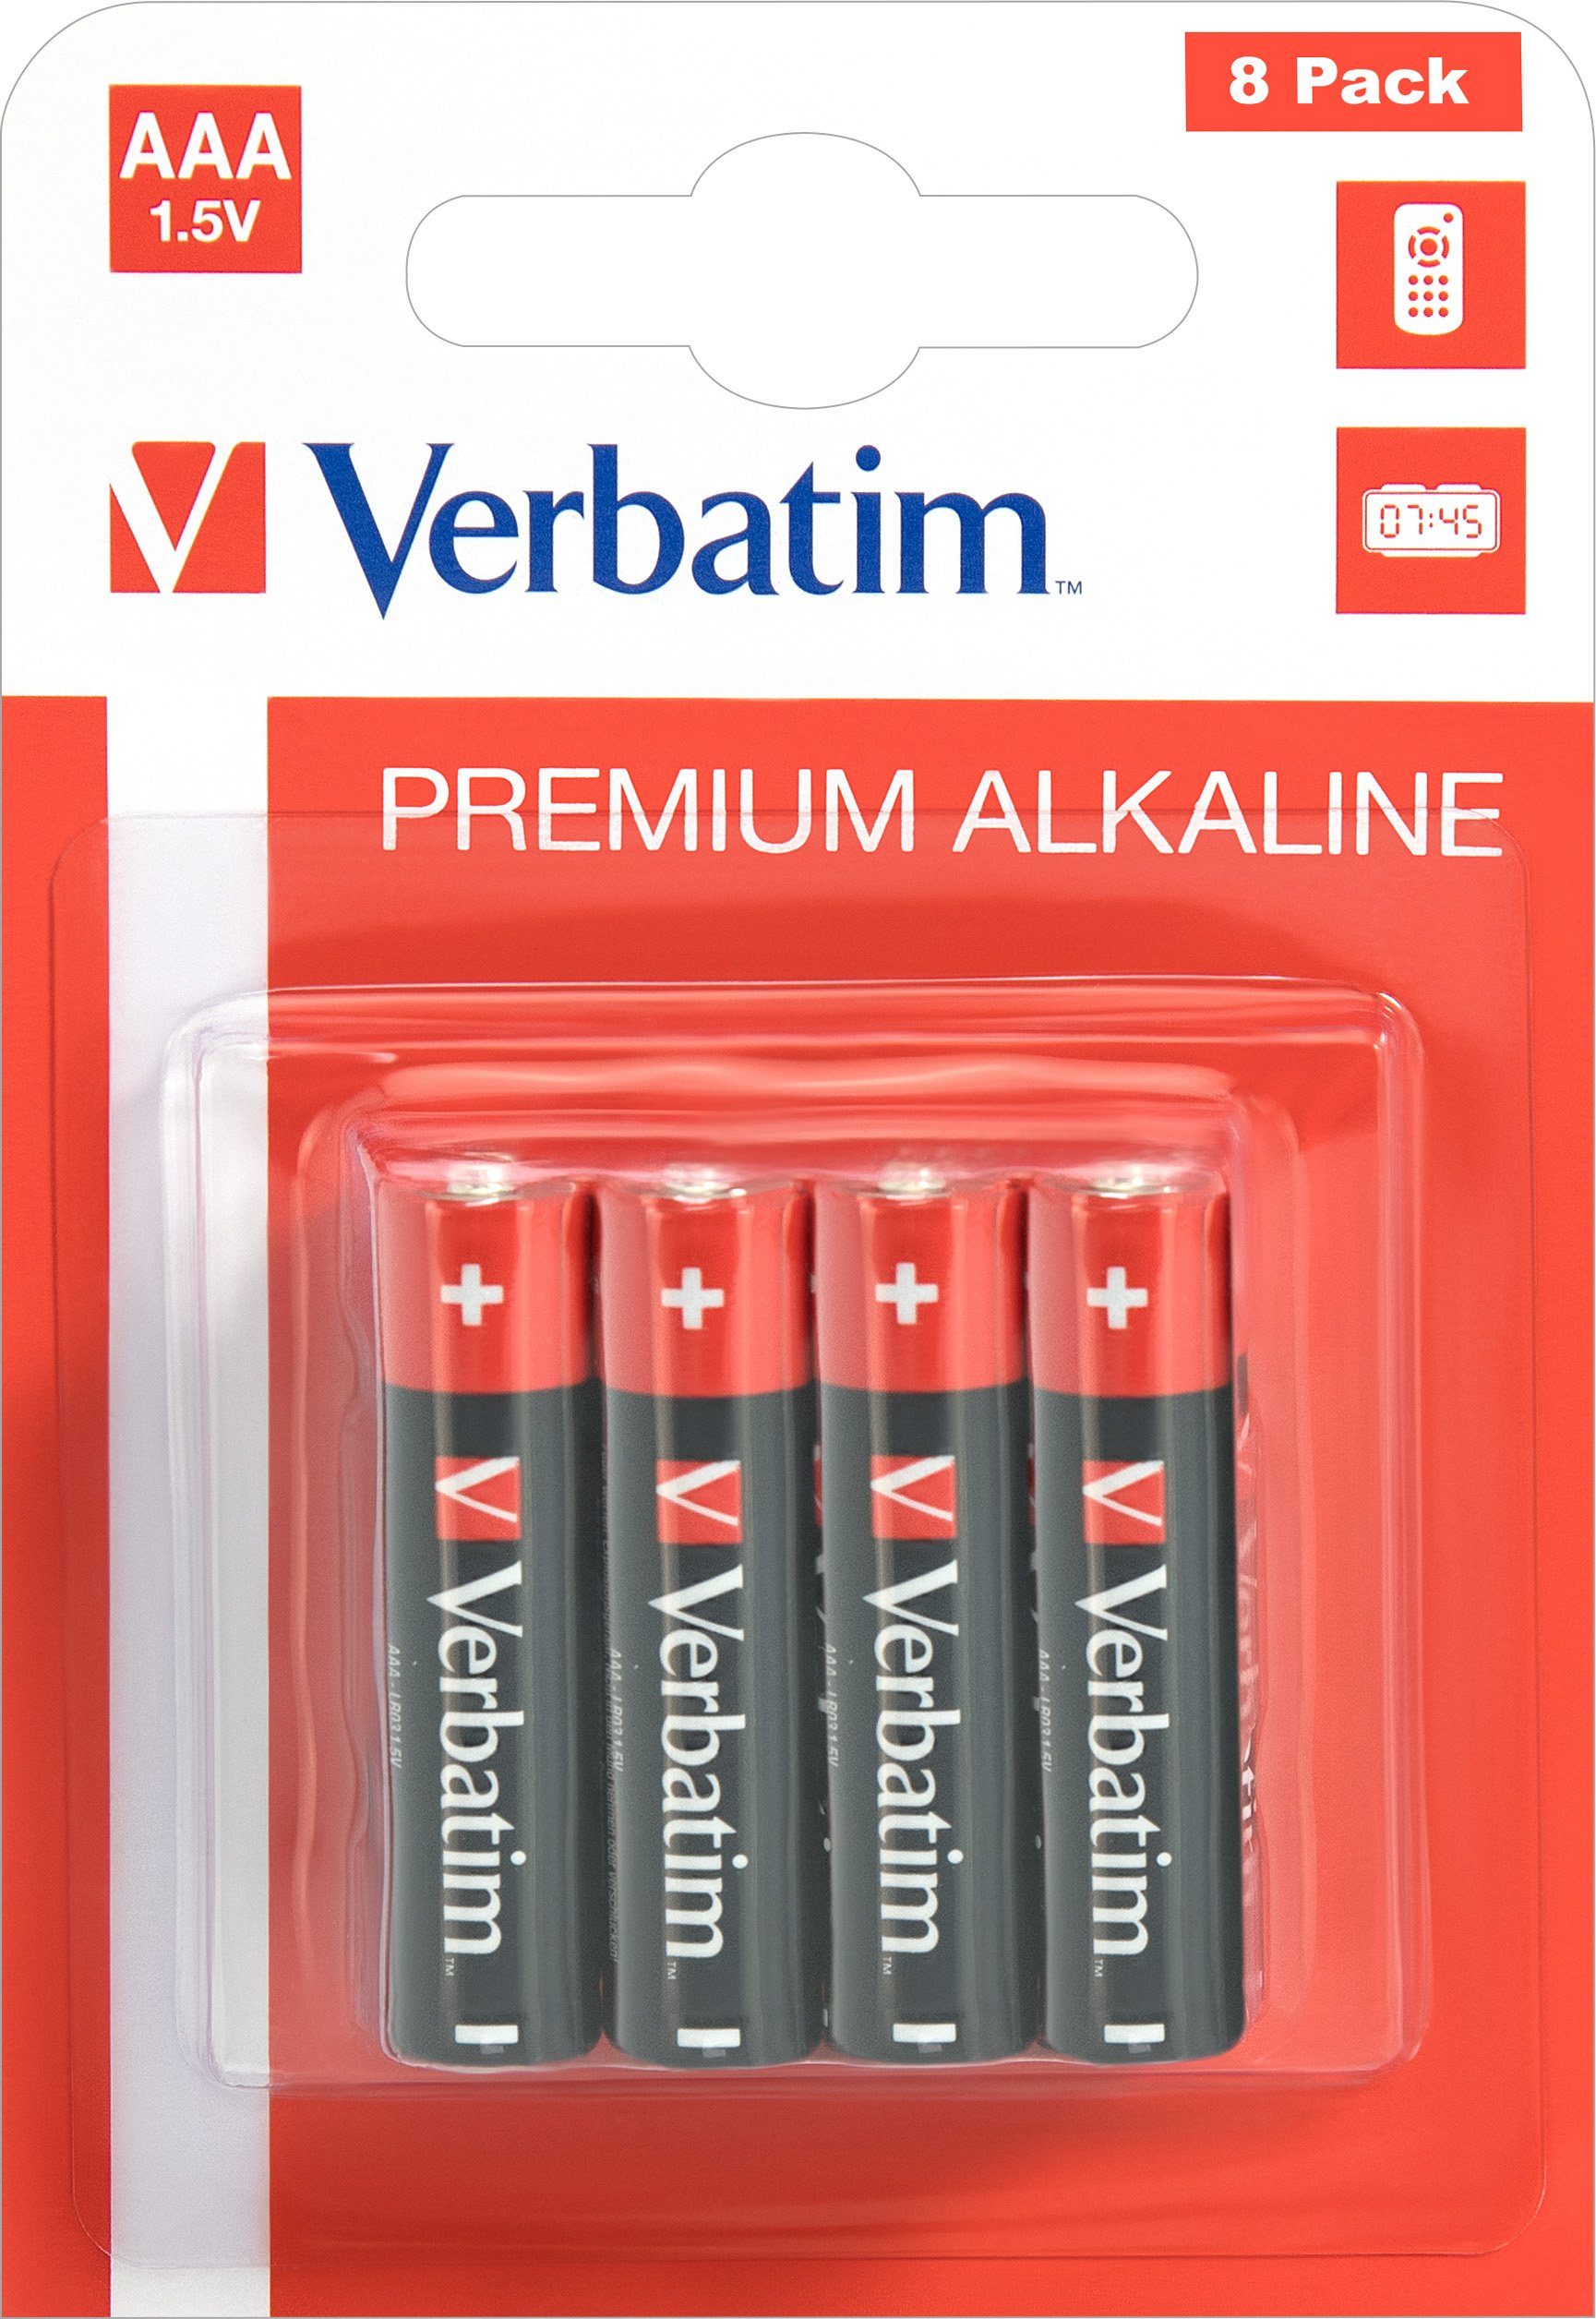 Verbatim Verbatim Batterie Alkaline, Retail LR03, Batterie 1.5V Premium, AAA, Bl Micro